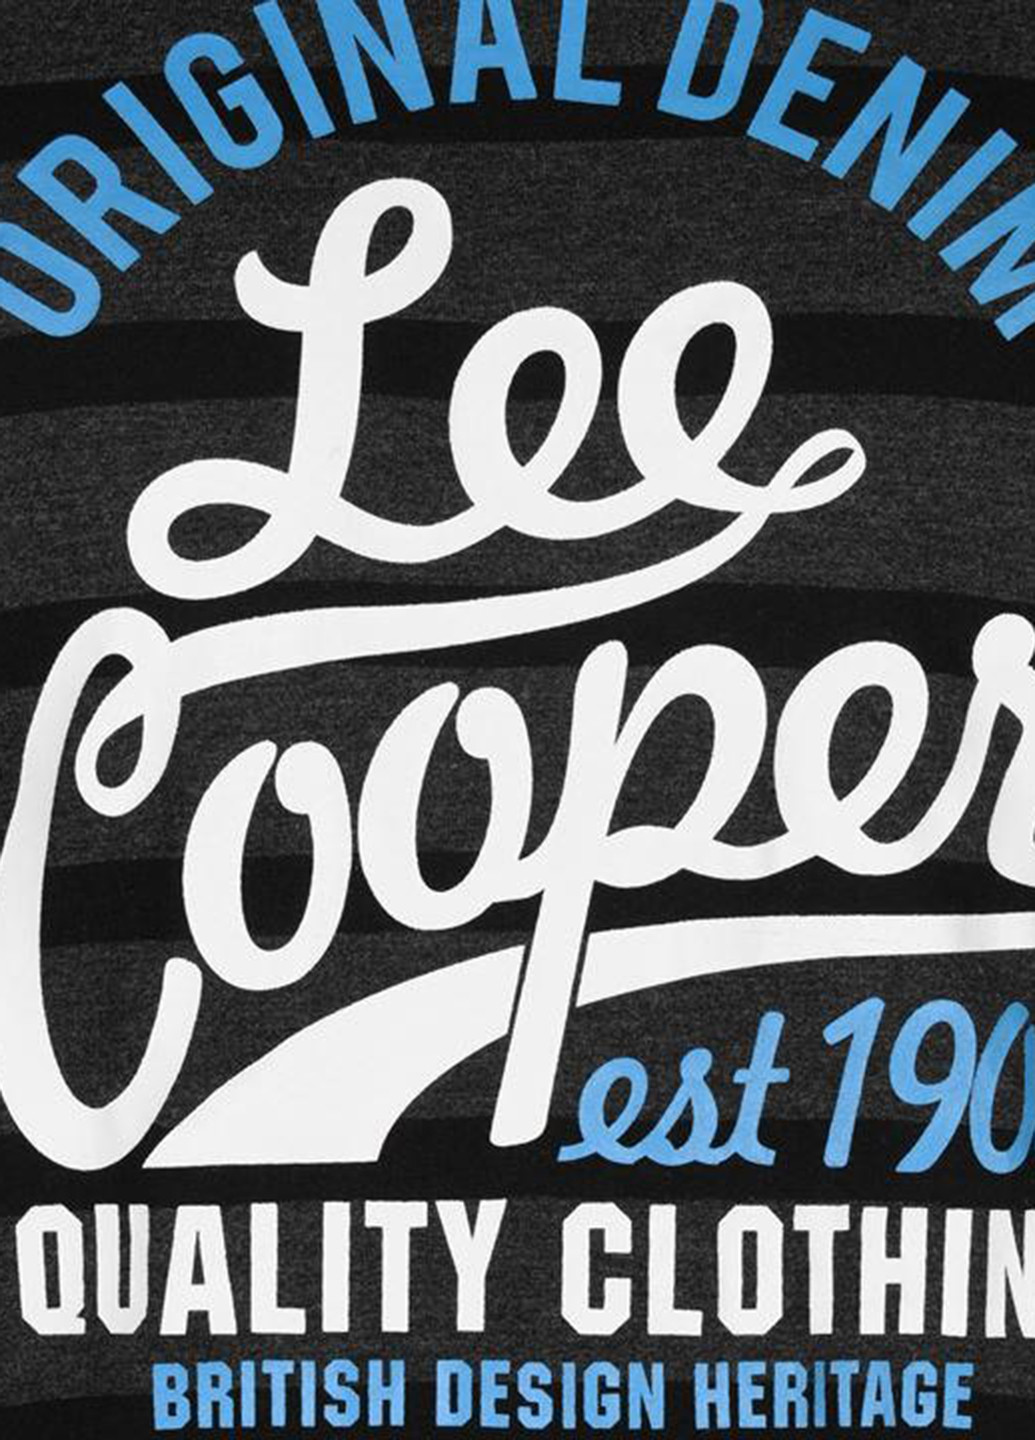 Темно-сіра футболка Lee Cooper